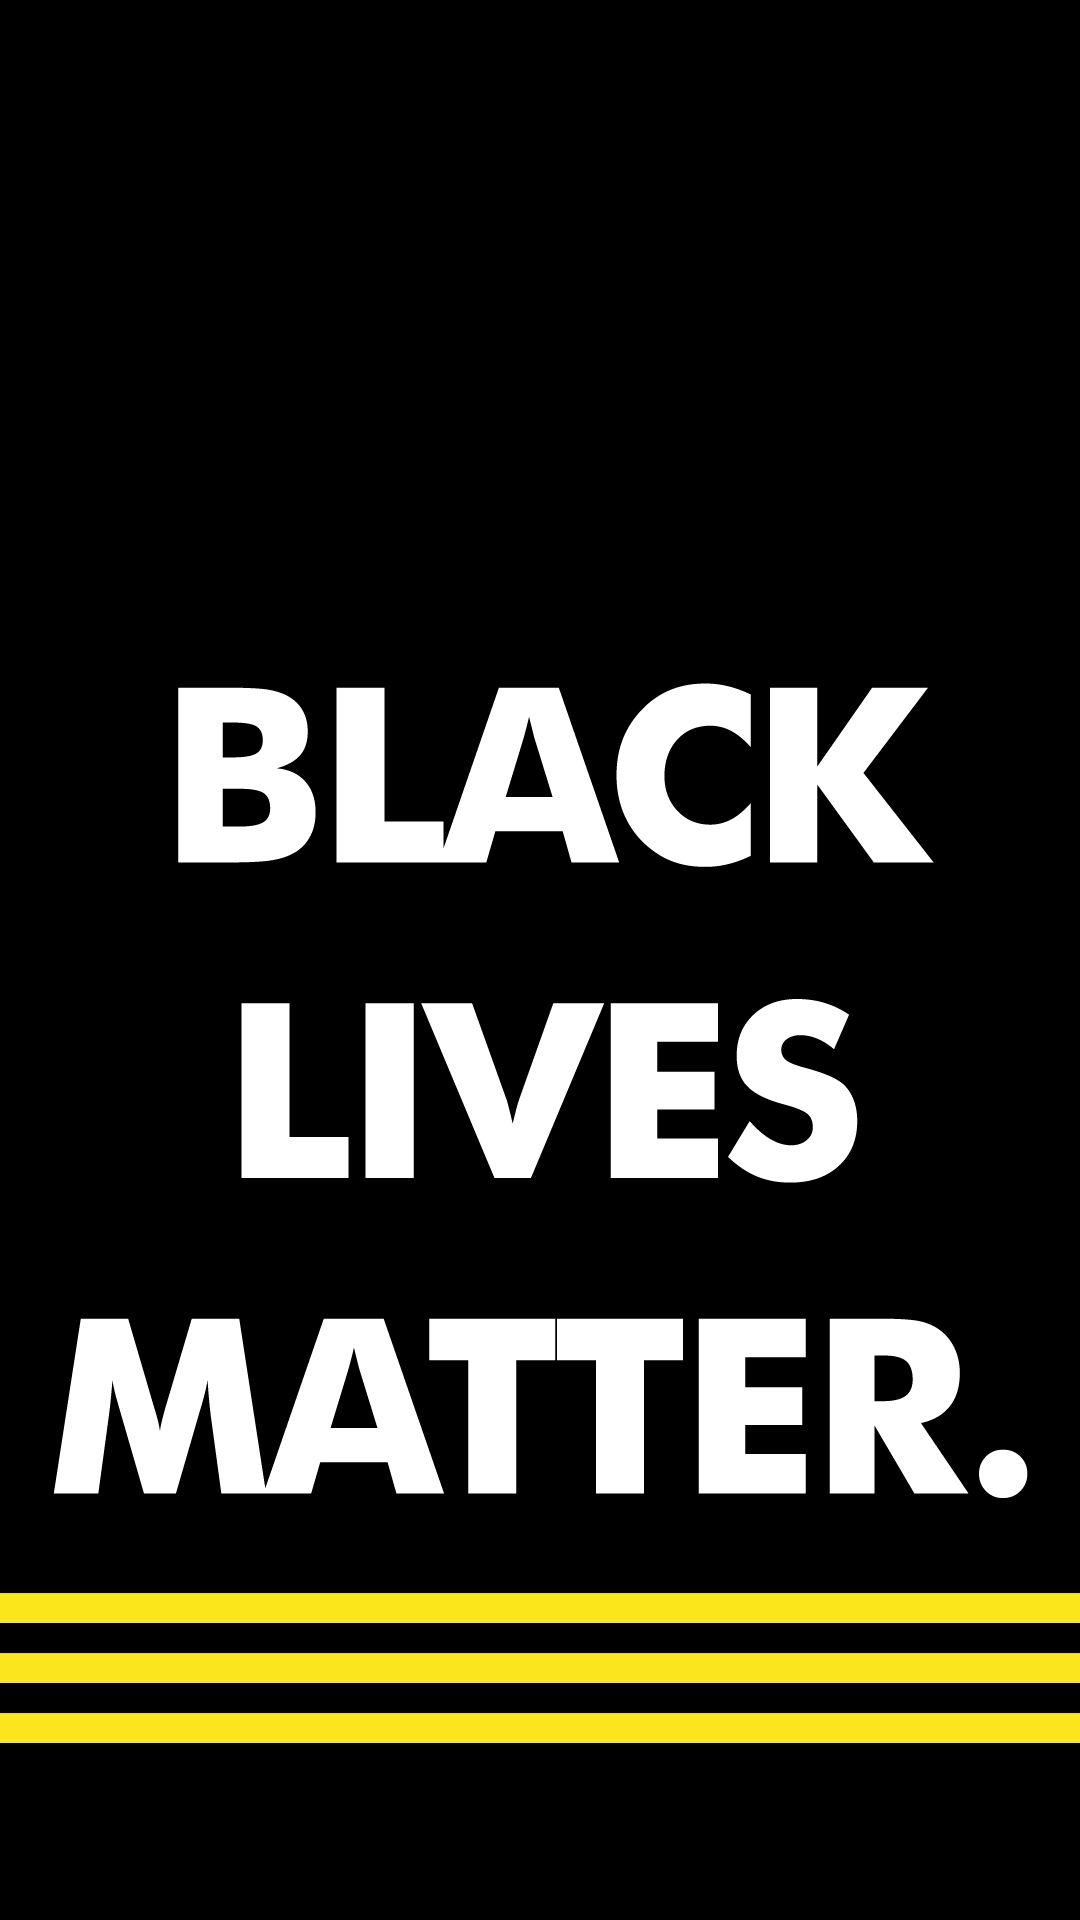 Roblox Background Black Lives Matter